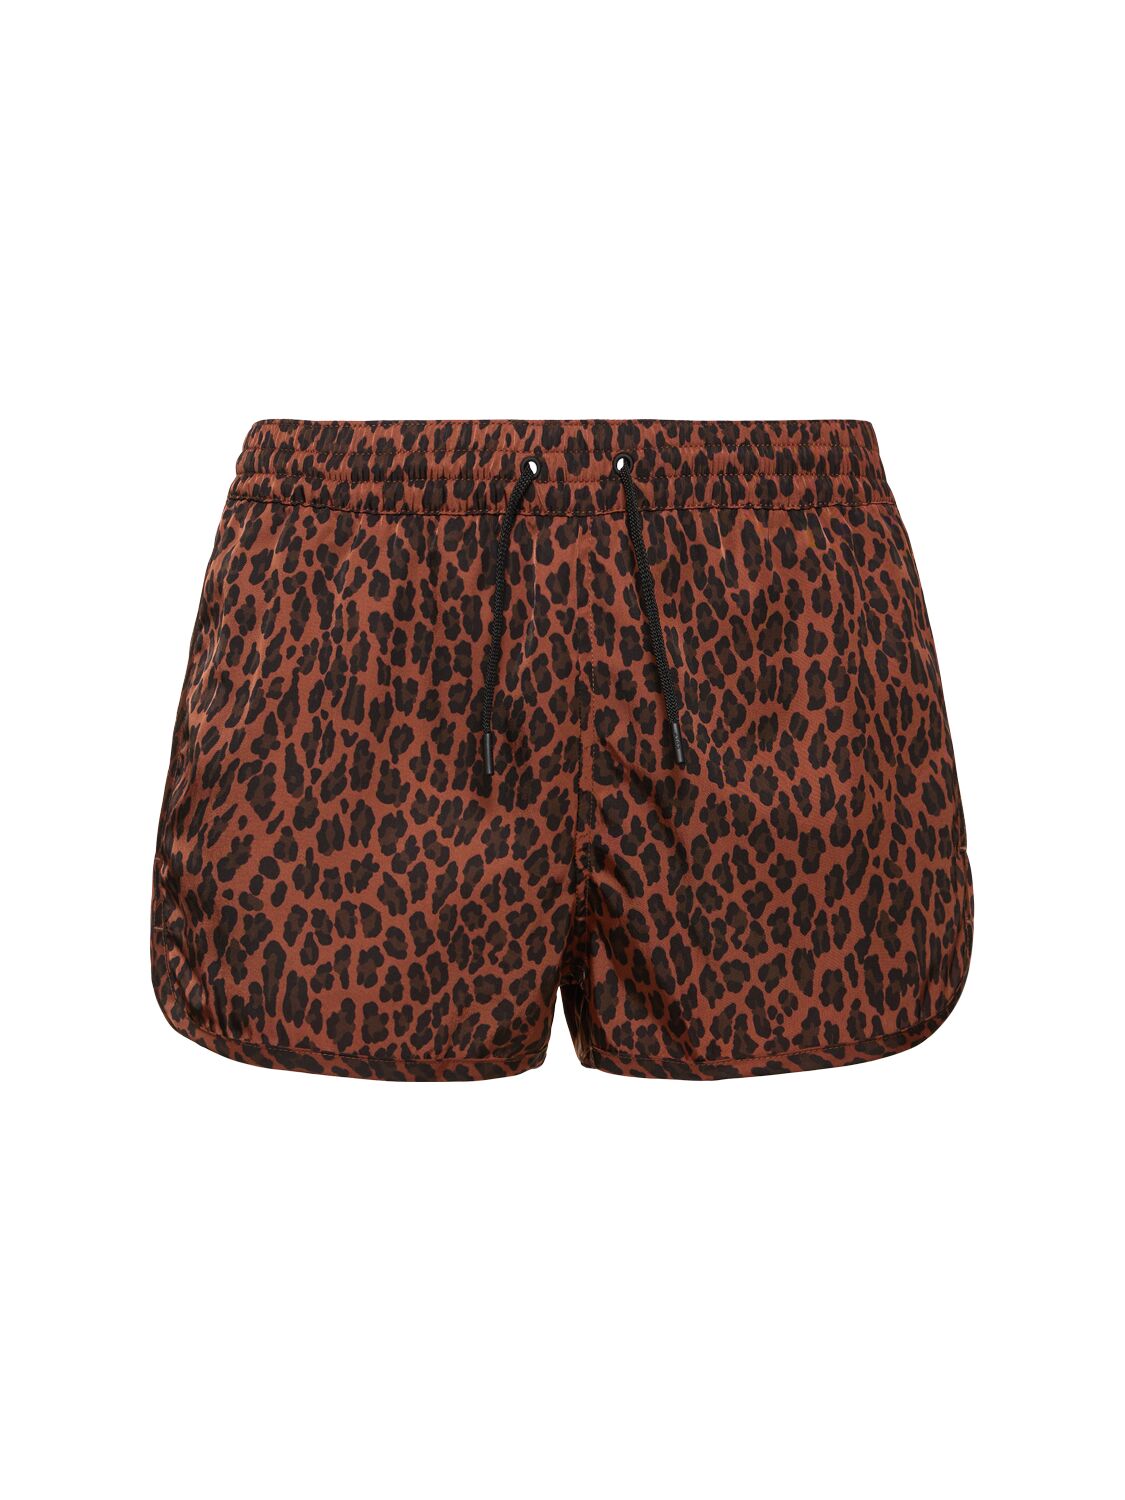 Image of Leopard Print Nylon Swim Shorts